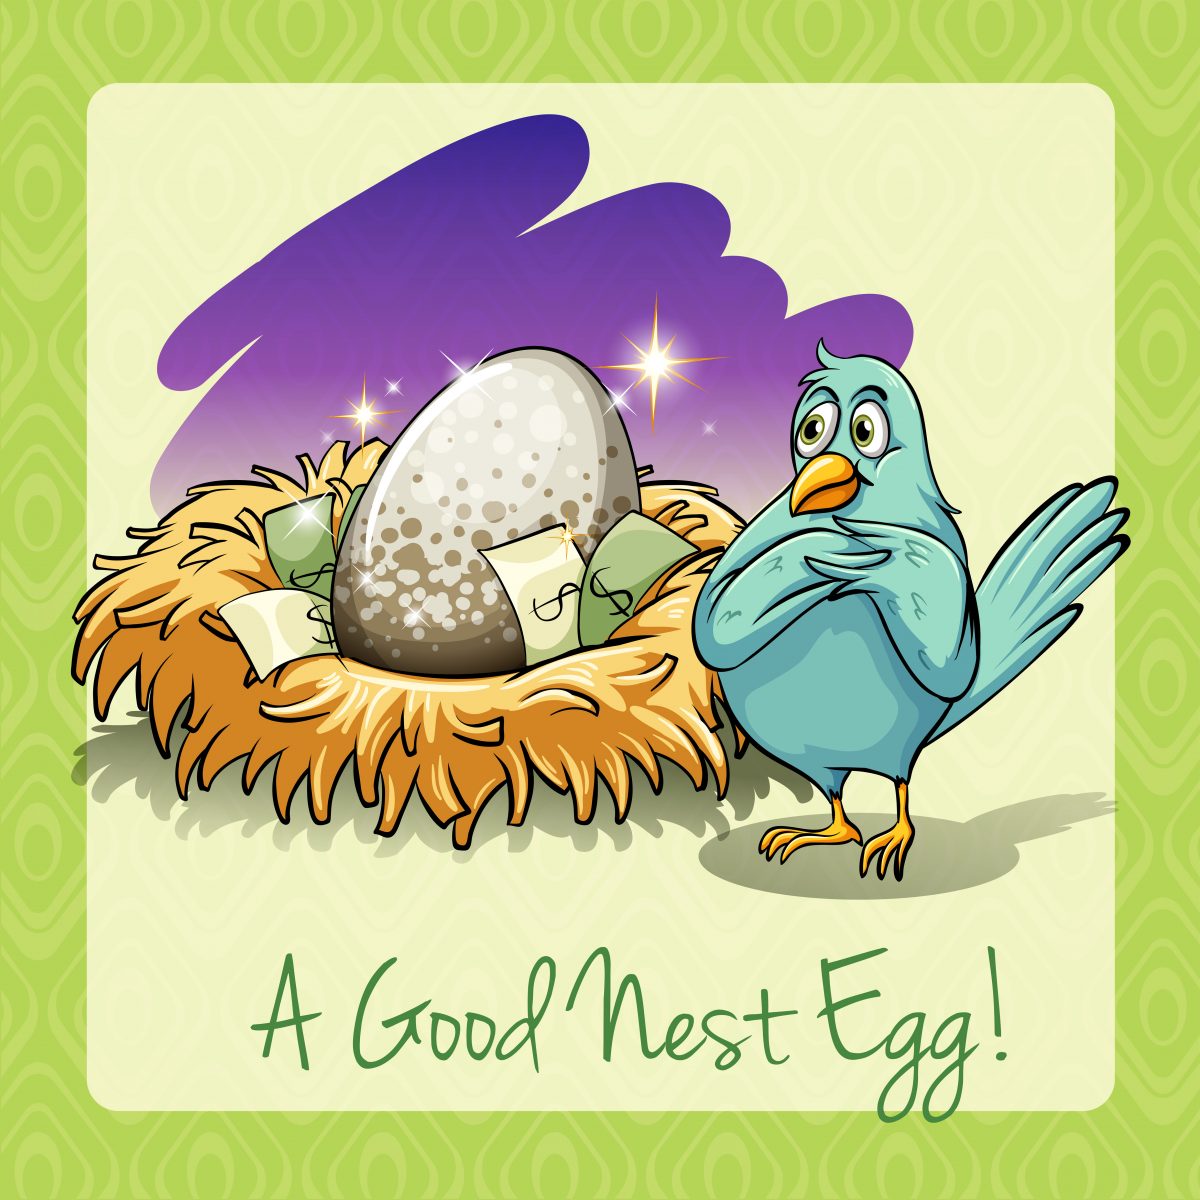 A good nest egg